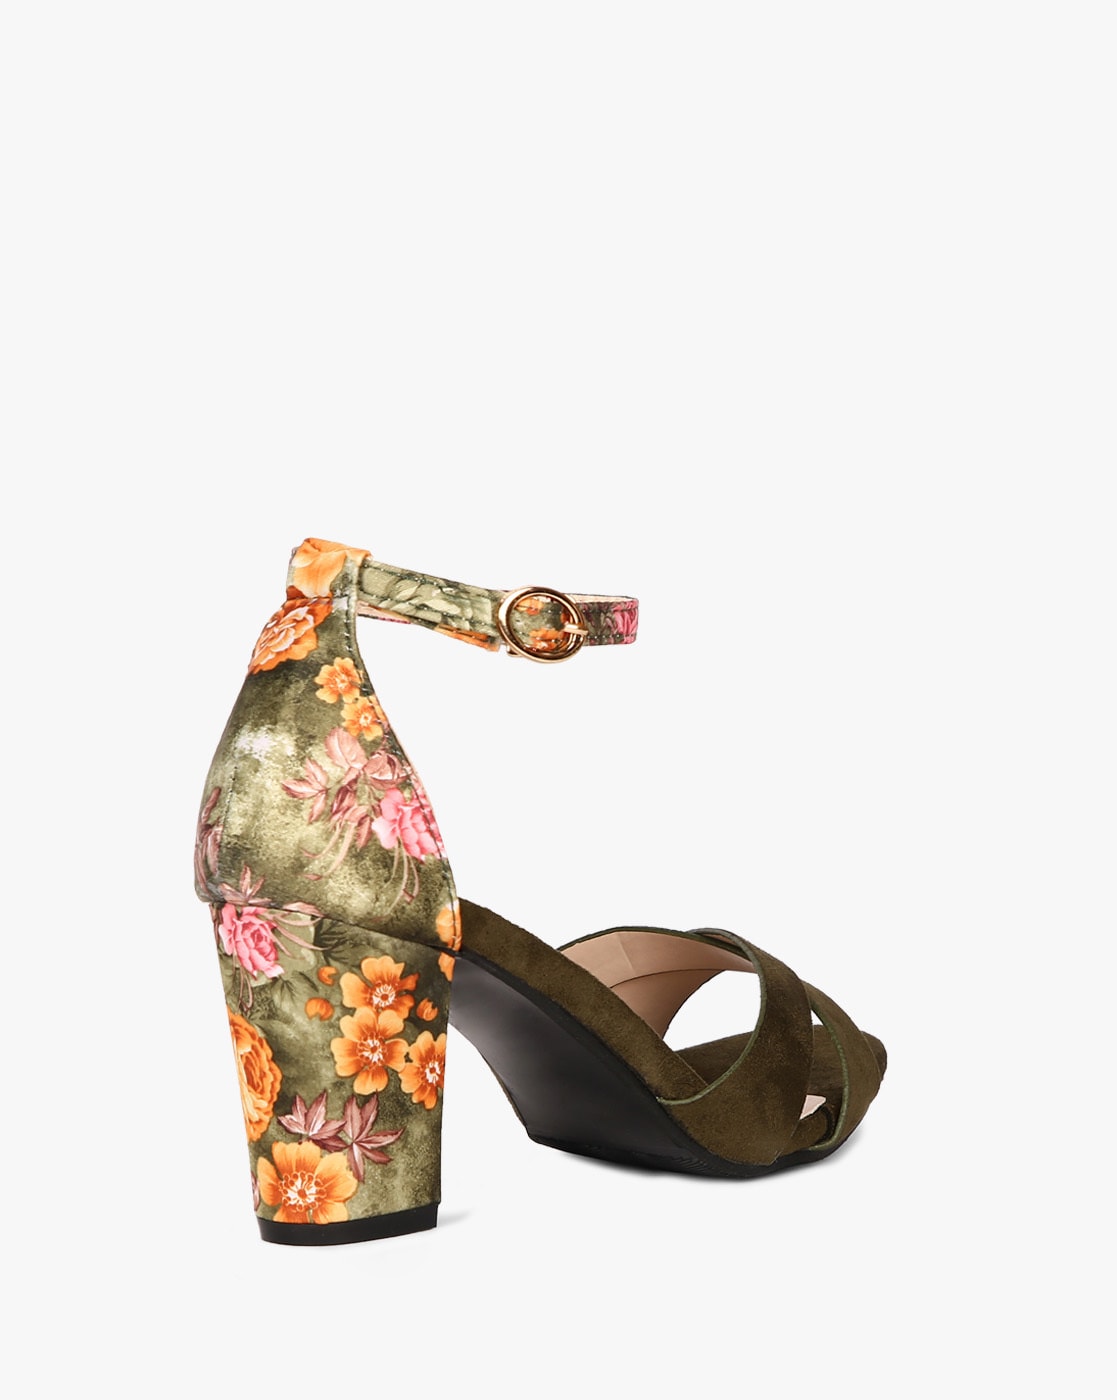 Shoes of Prey Multi Color Floral Print Blocks Heels Pumps Size 9.5 | eBay